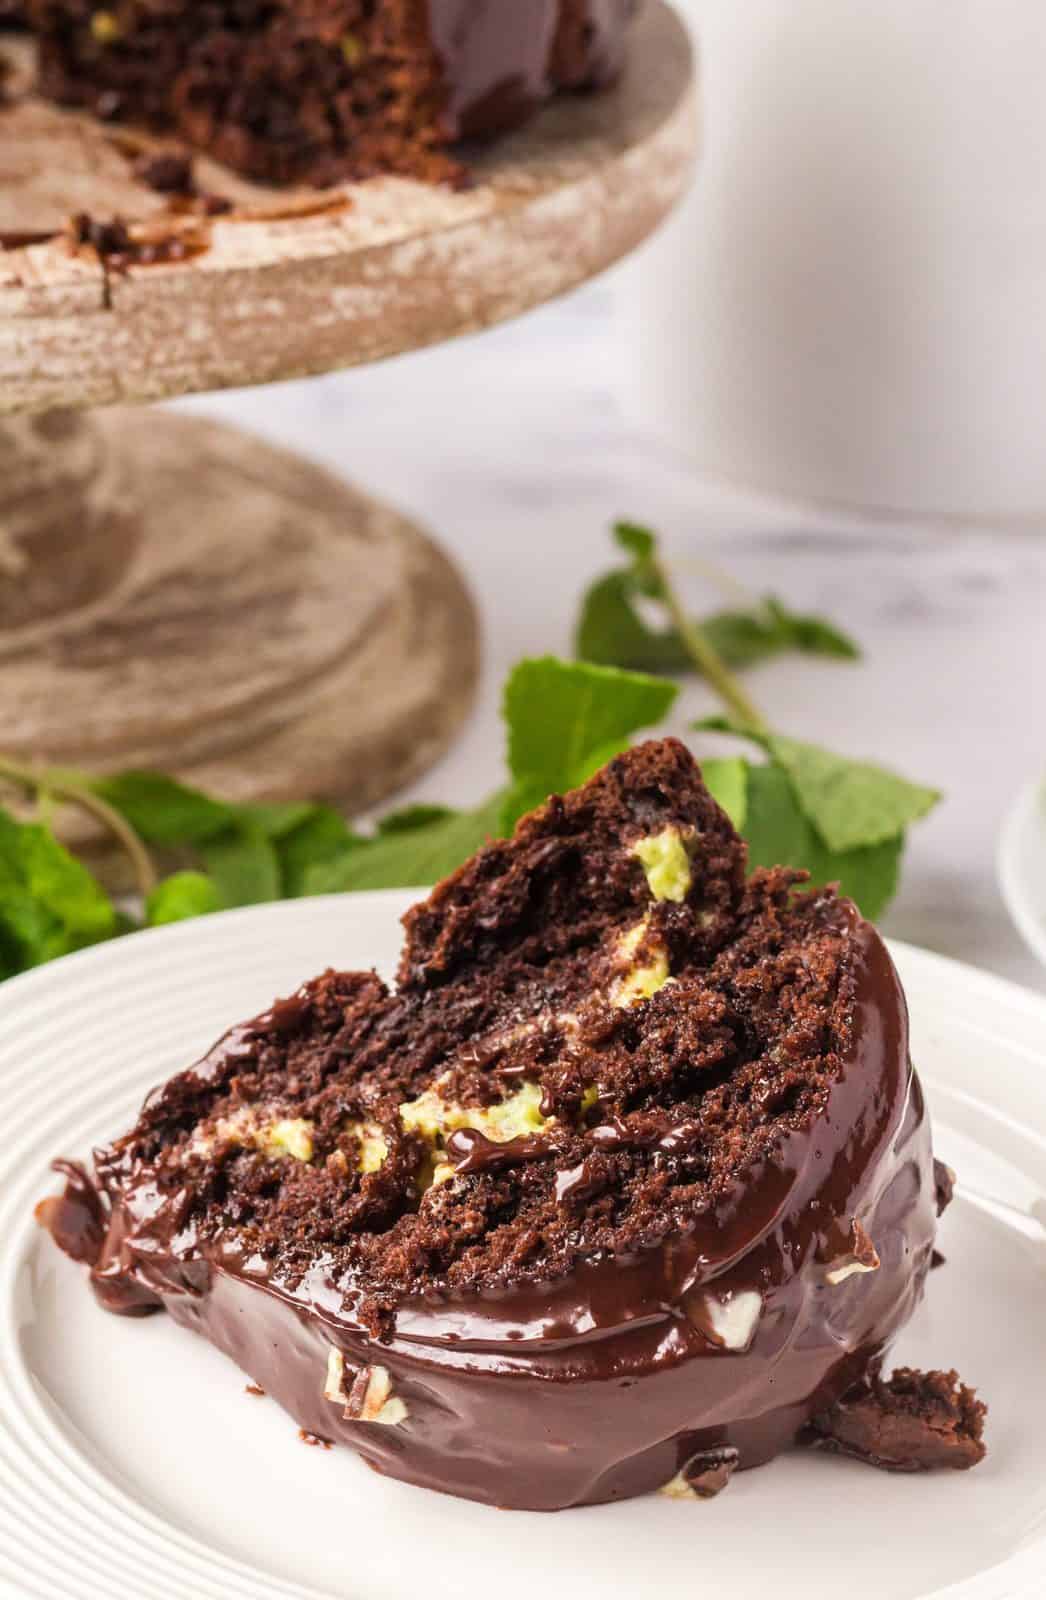 Slice of Mint Chocolate Bundt Cake on plate showing filling.